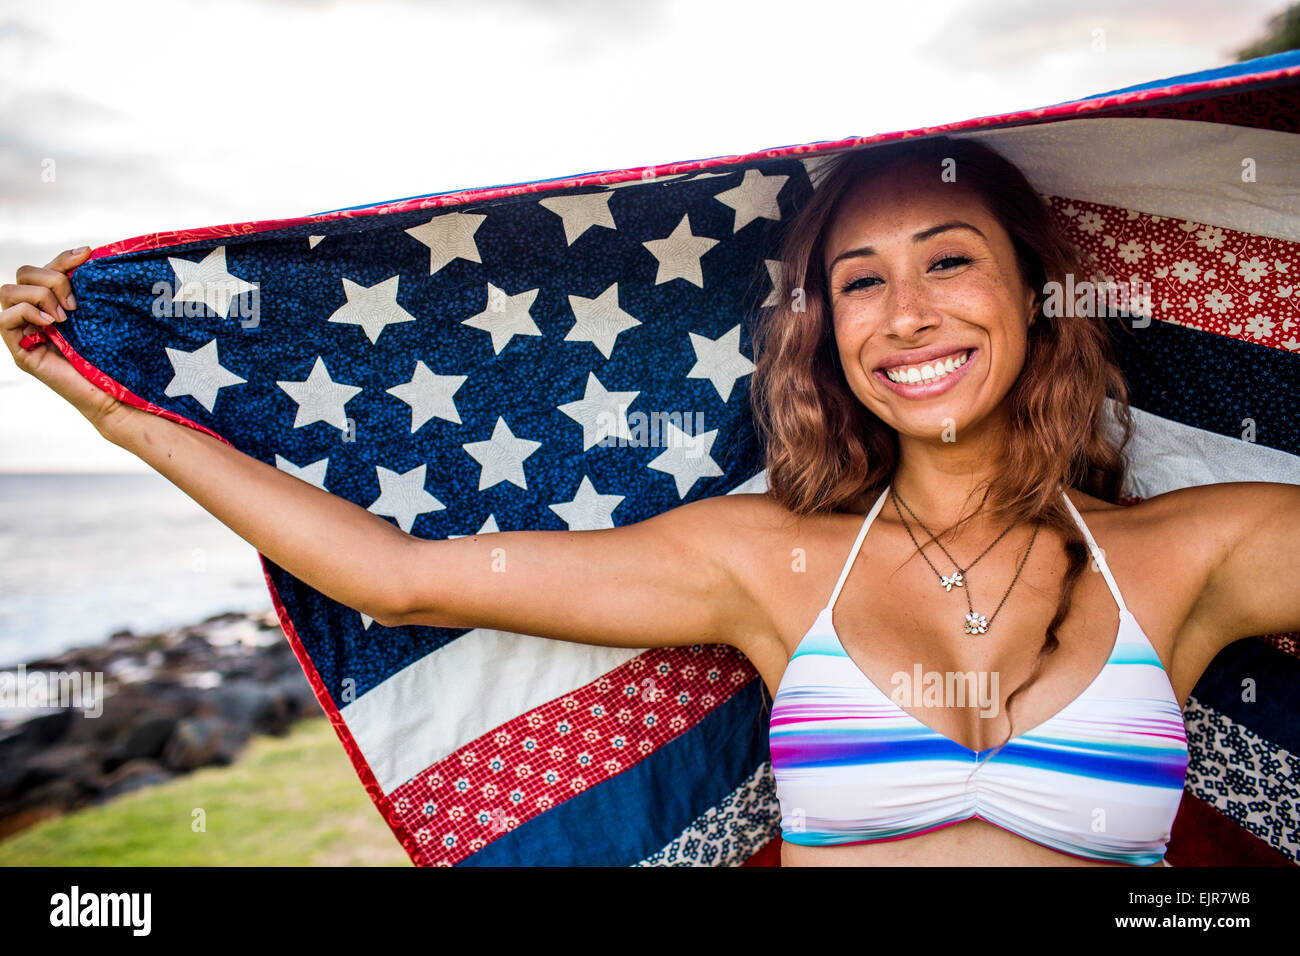 American flag bikini hi-res stock photography and images - Alamy